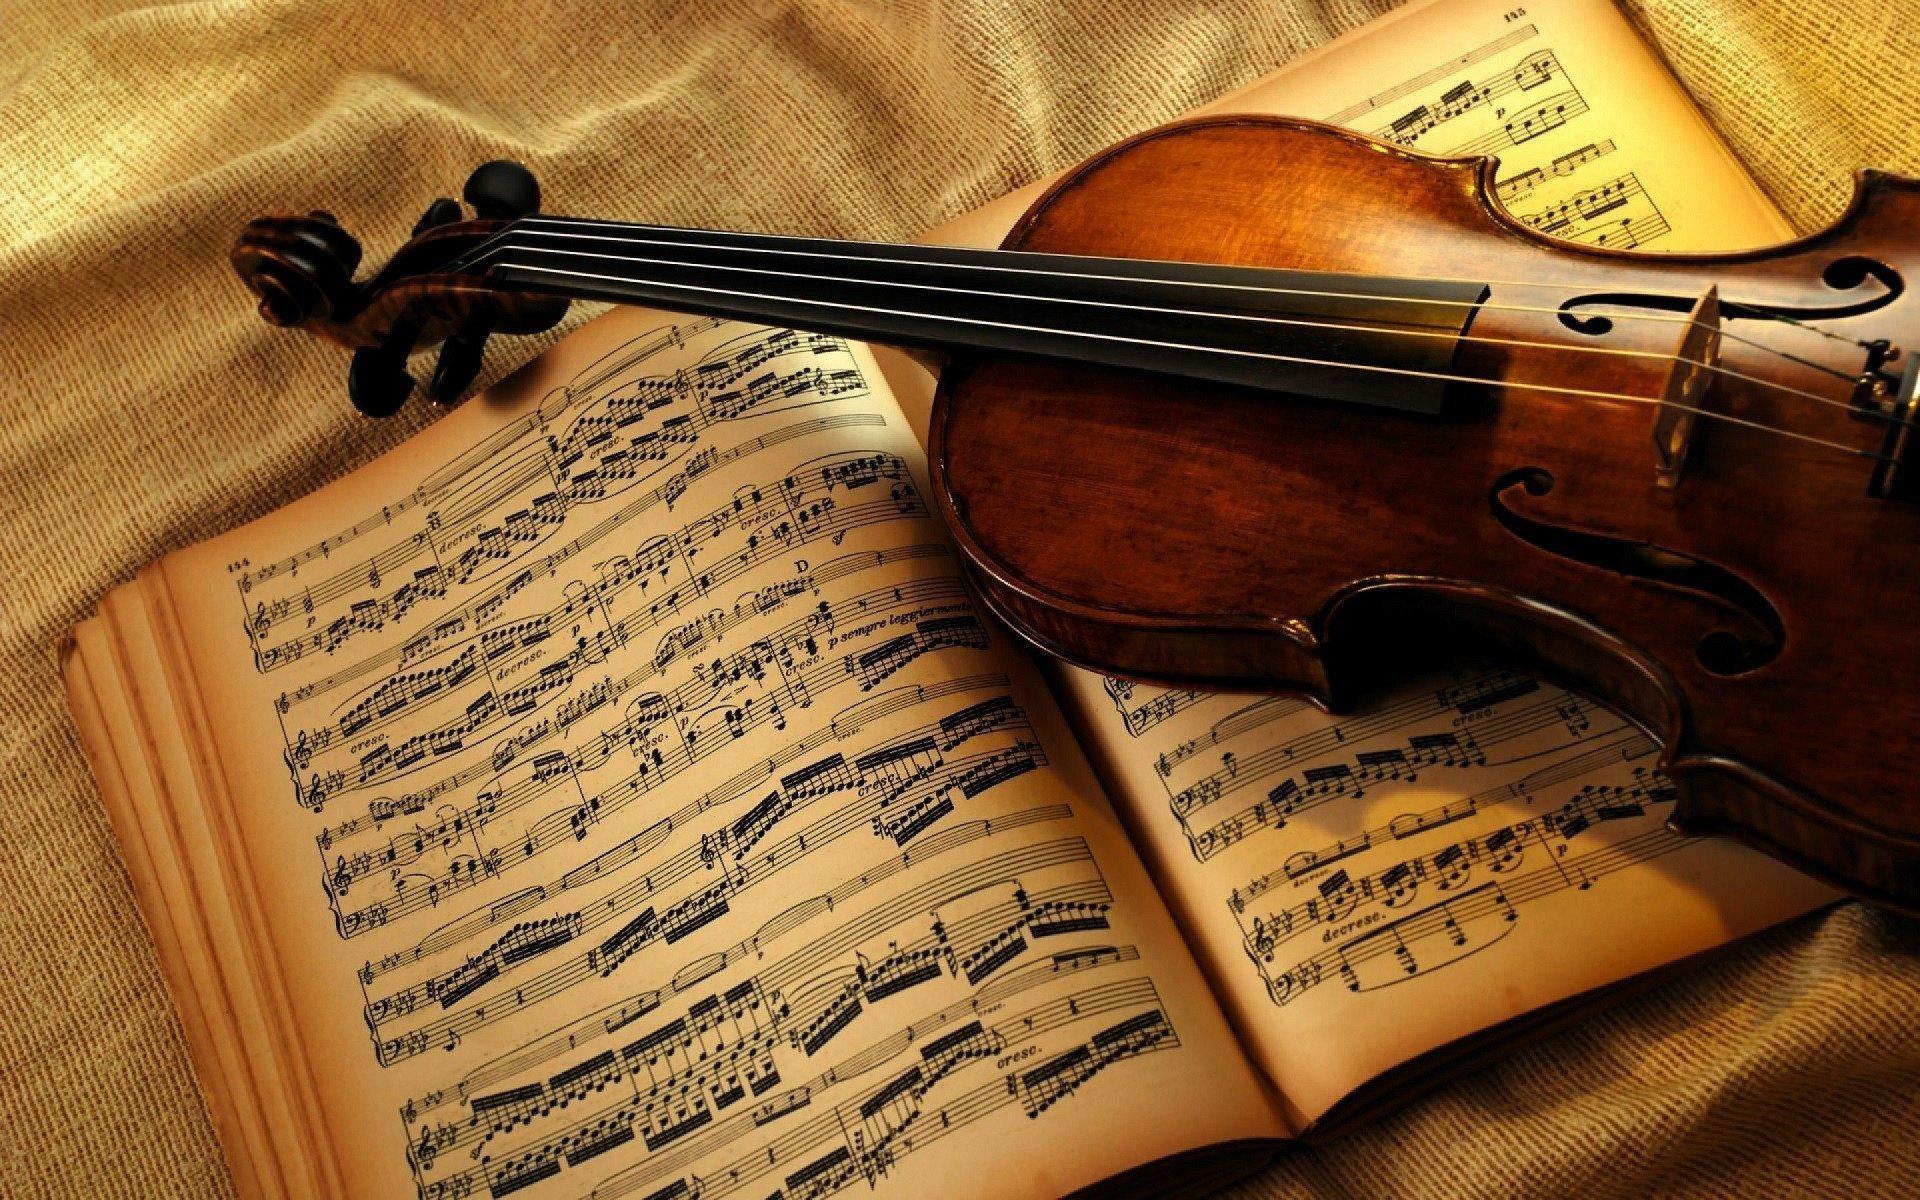 hands books sunlight bokeh violin musical notes music sheet